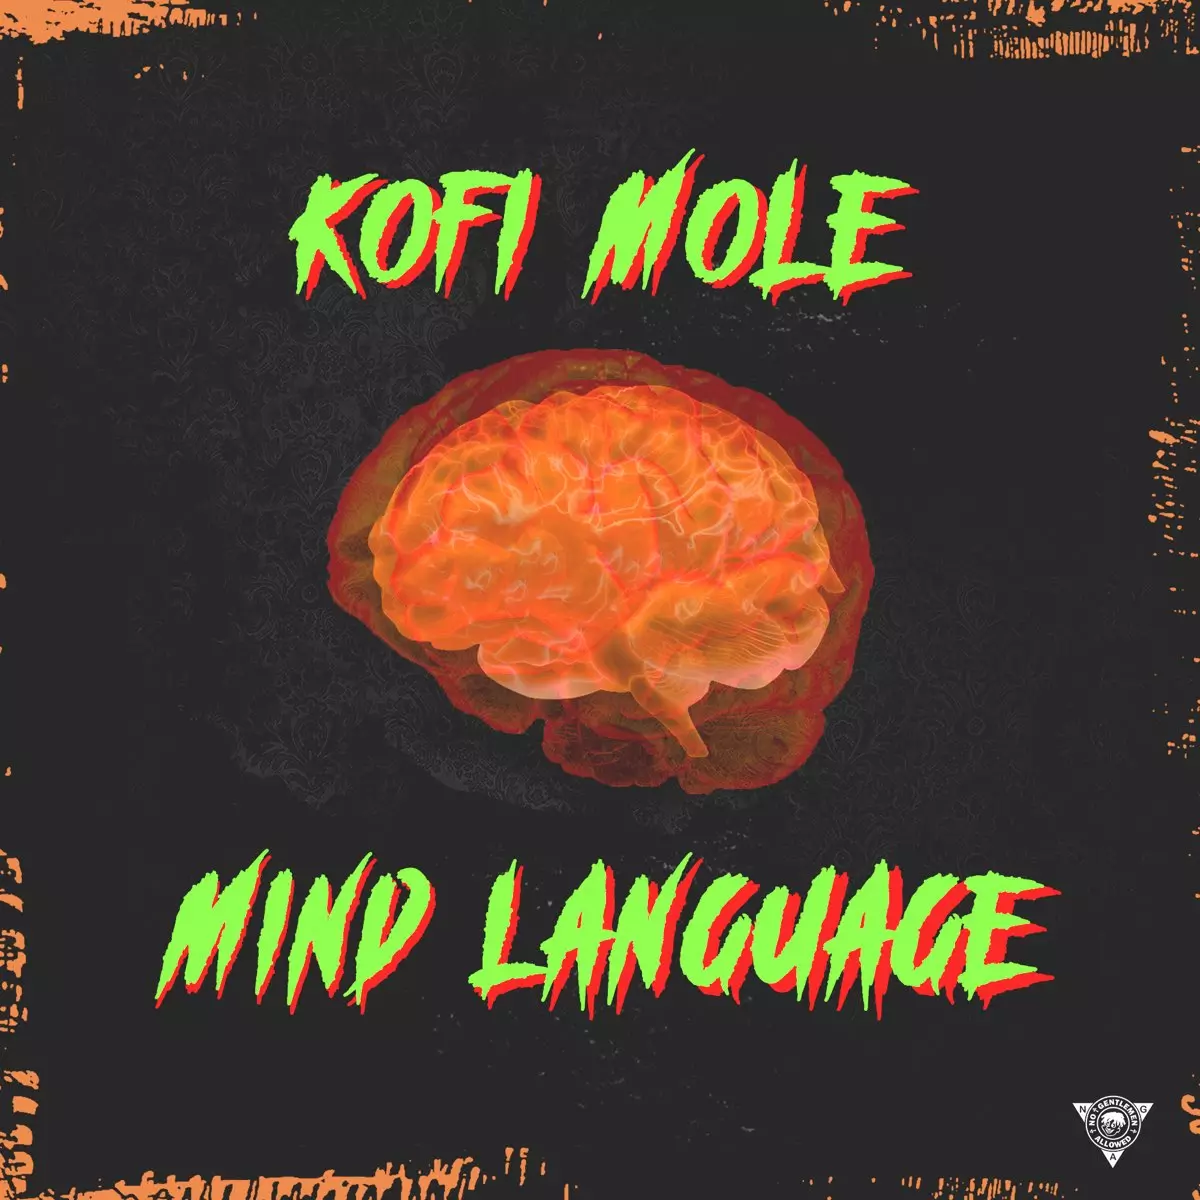 Mind Language - Single by Kofi Mole on Apple Music